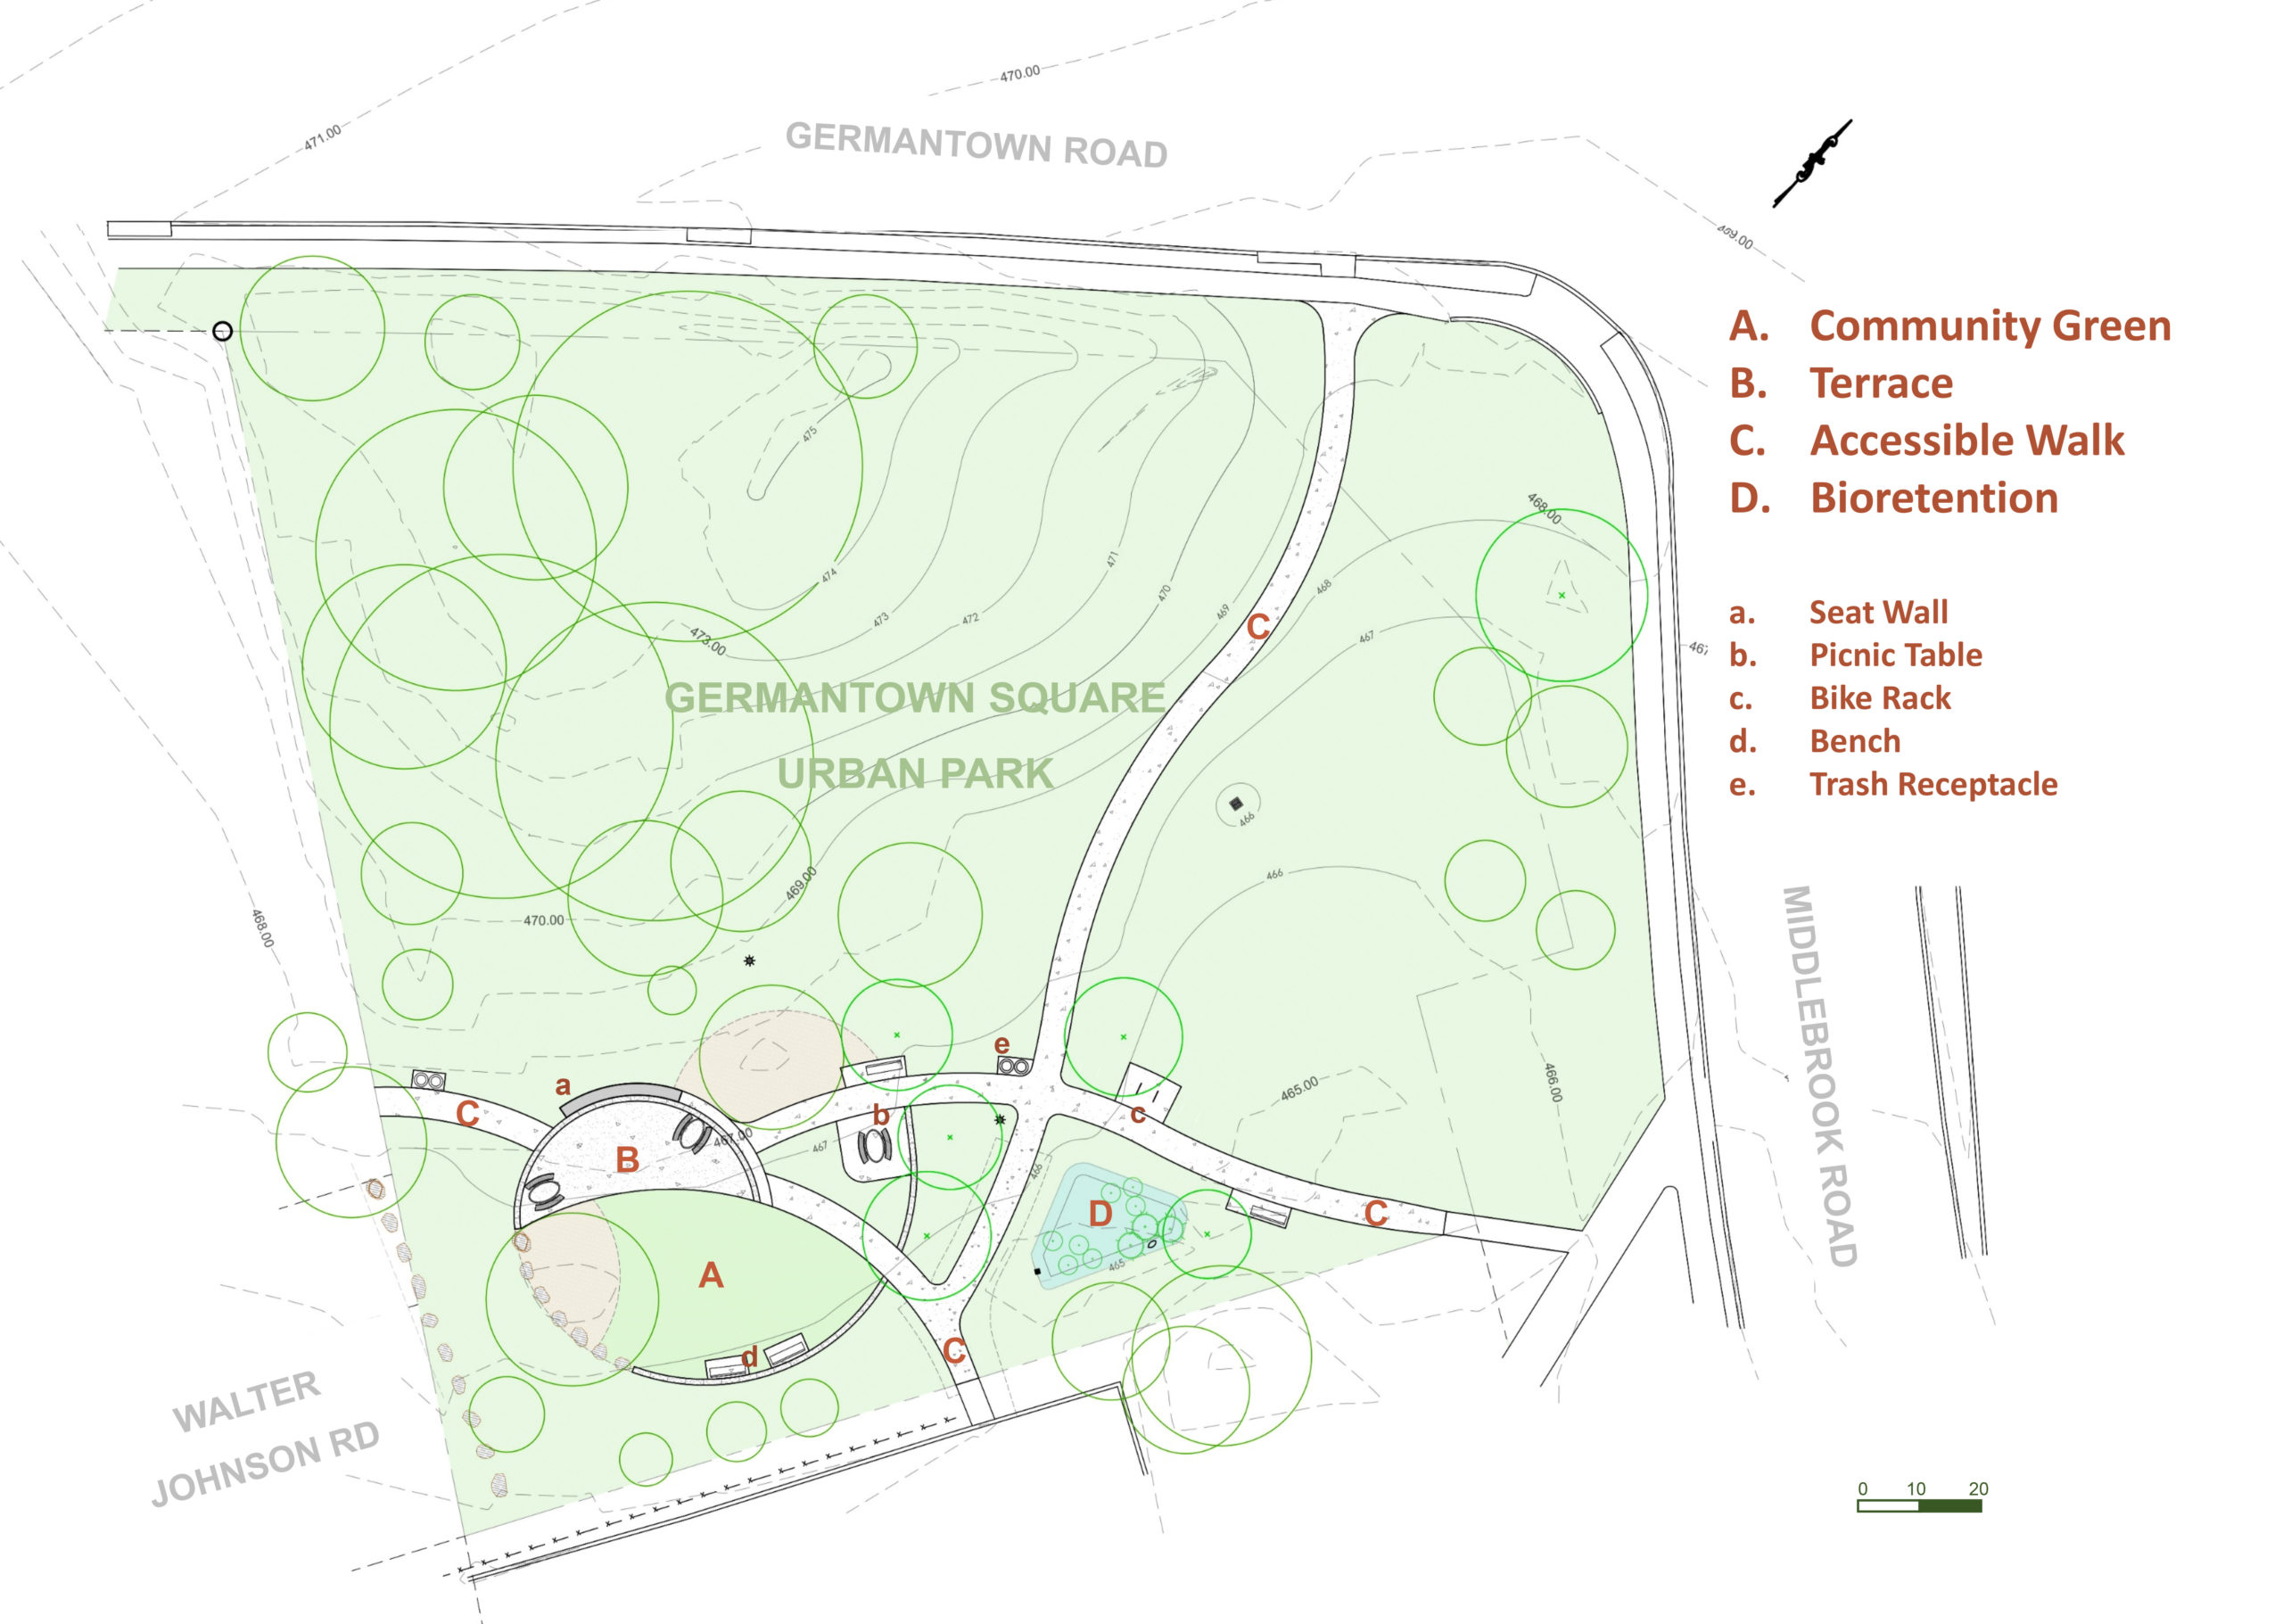 Site Plan for Germantown Square Urban Park